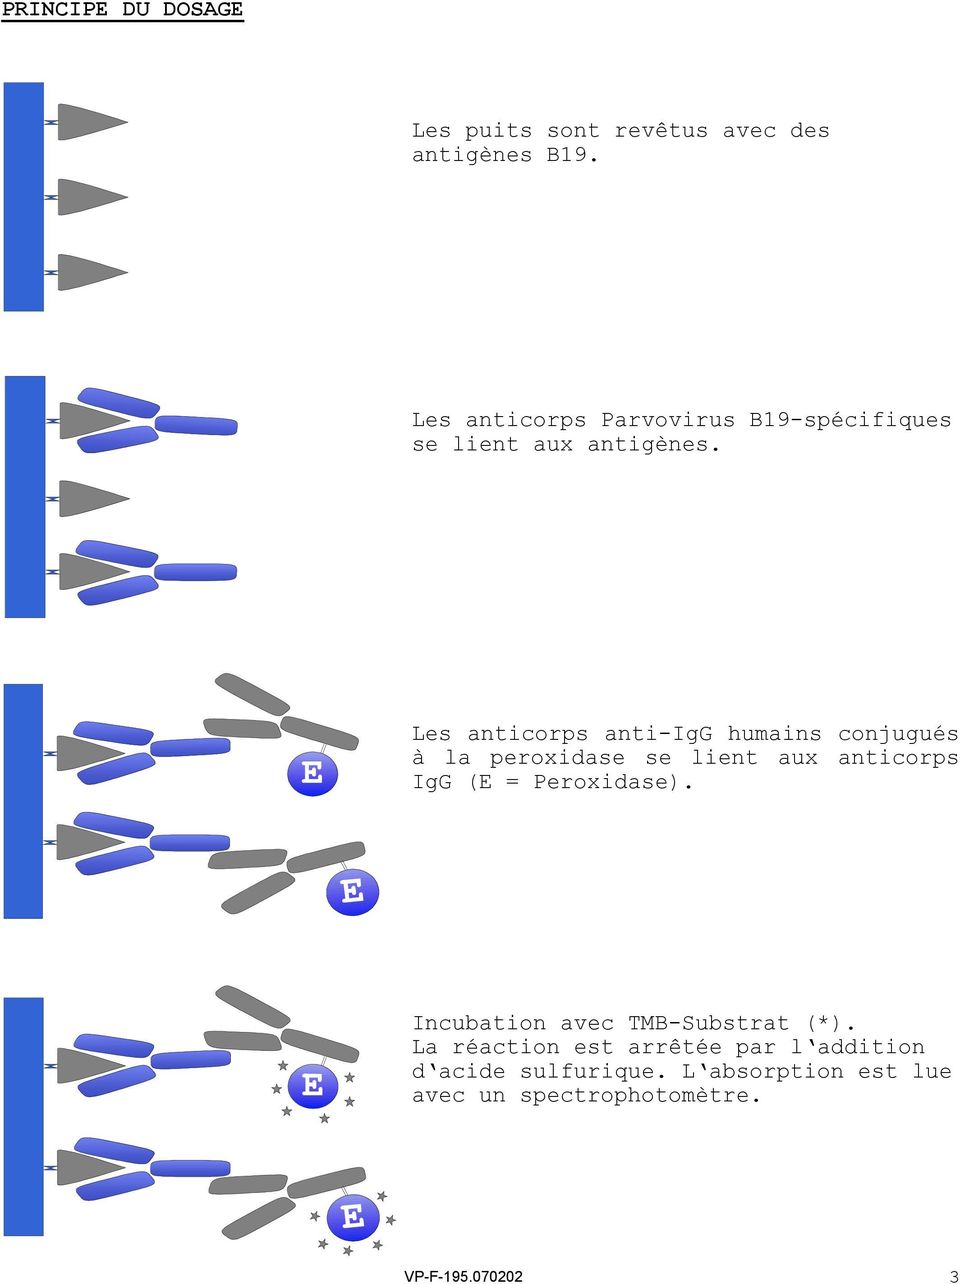 Les anticorps anti-igg humains conjugués à la peroxidase se lient aux anticorps IgG (E =